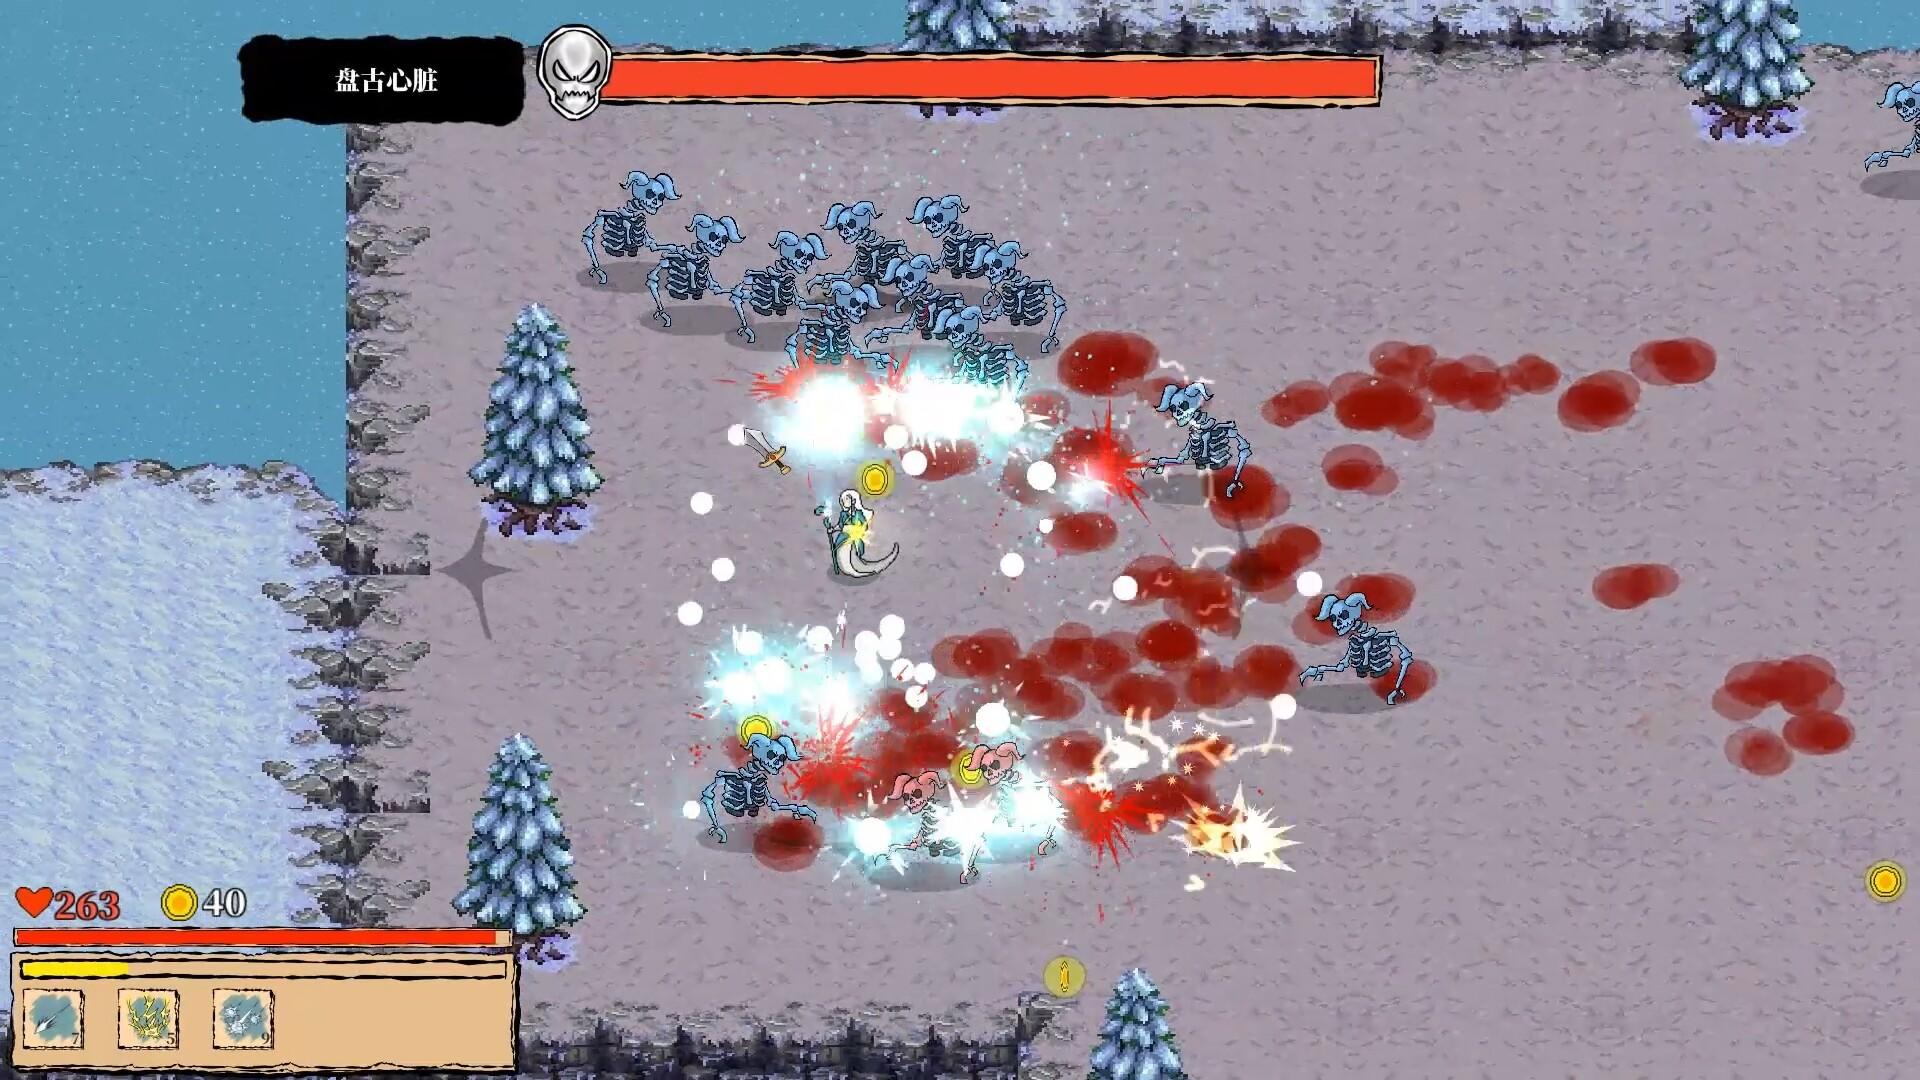 Deitydead：Elder Trial screenshot game